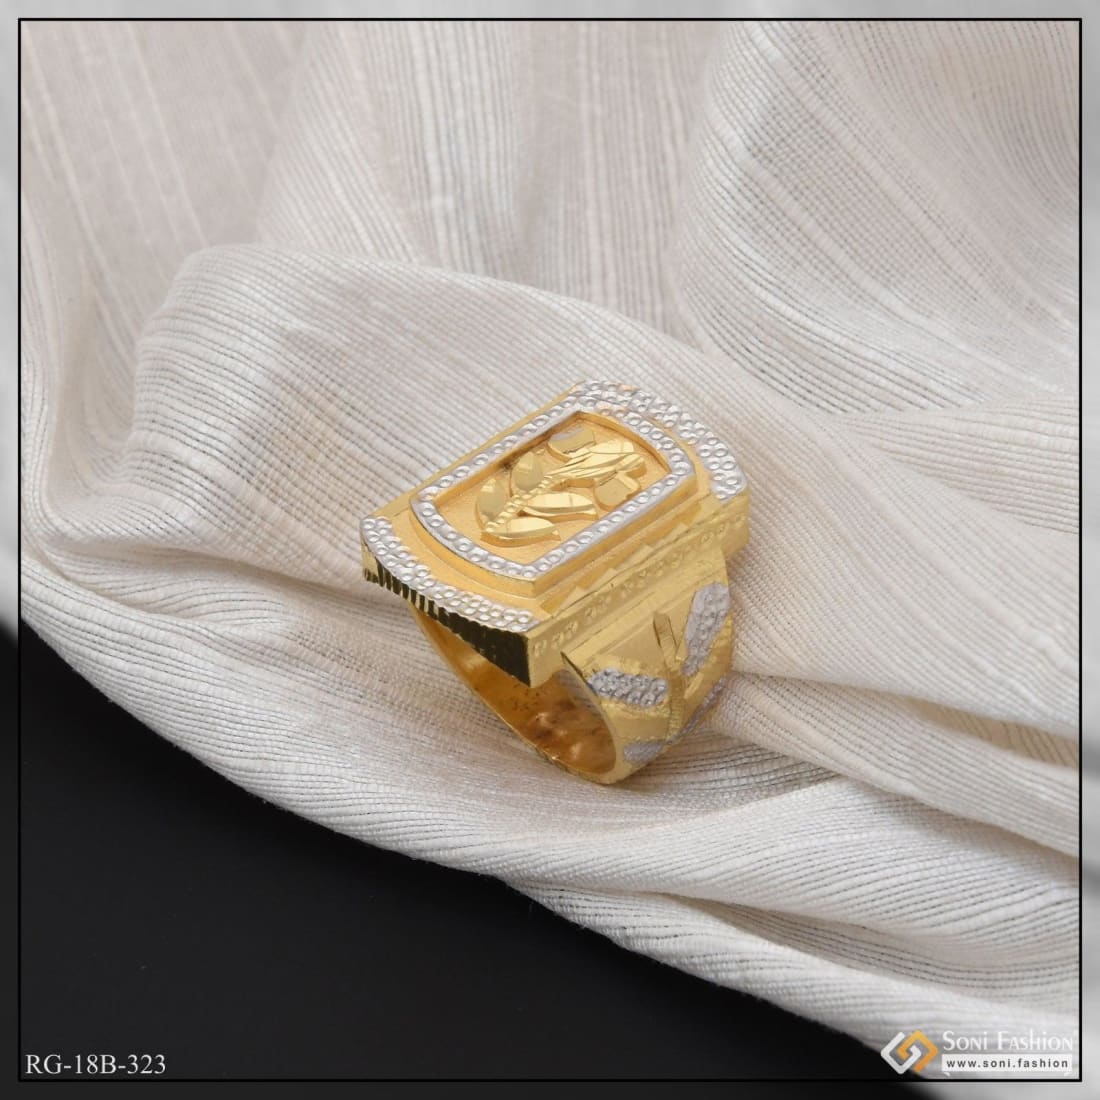 Cairo Signet Ring in 18K Yellow Gold, 23.6mm | David Yurman